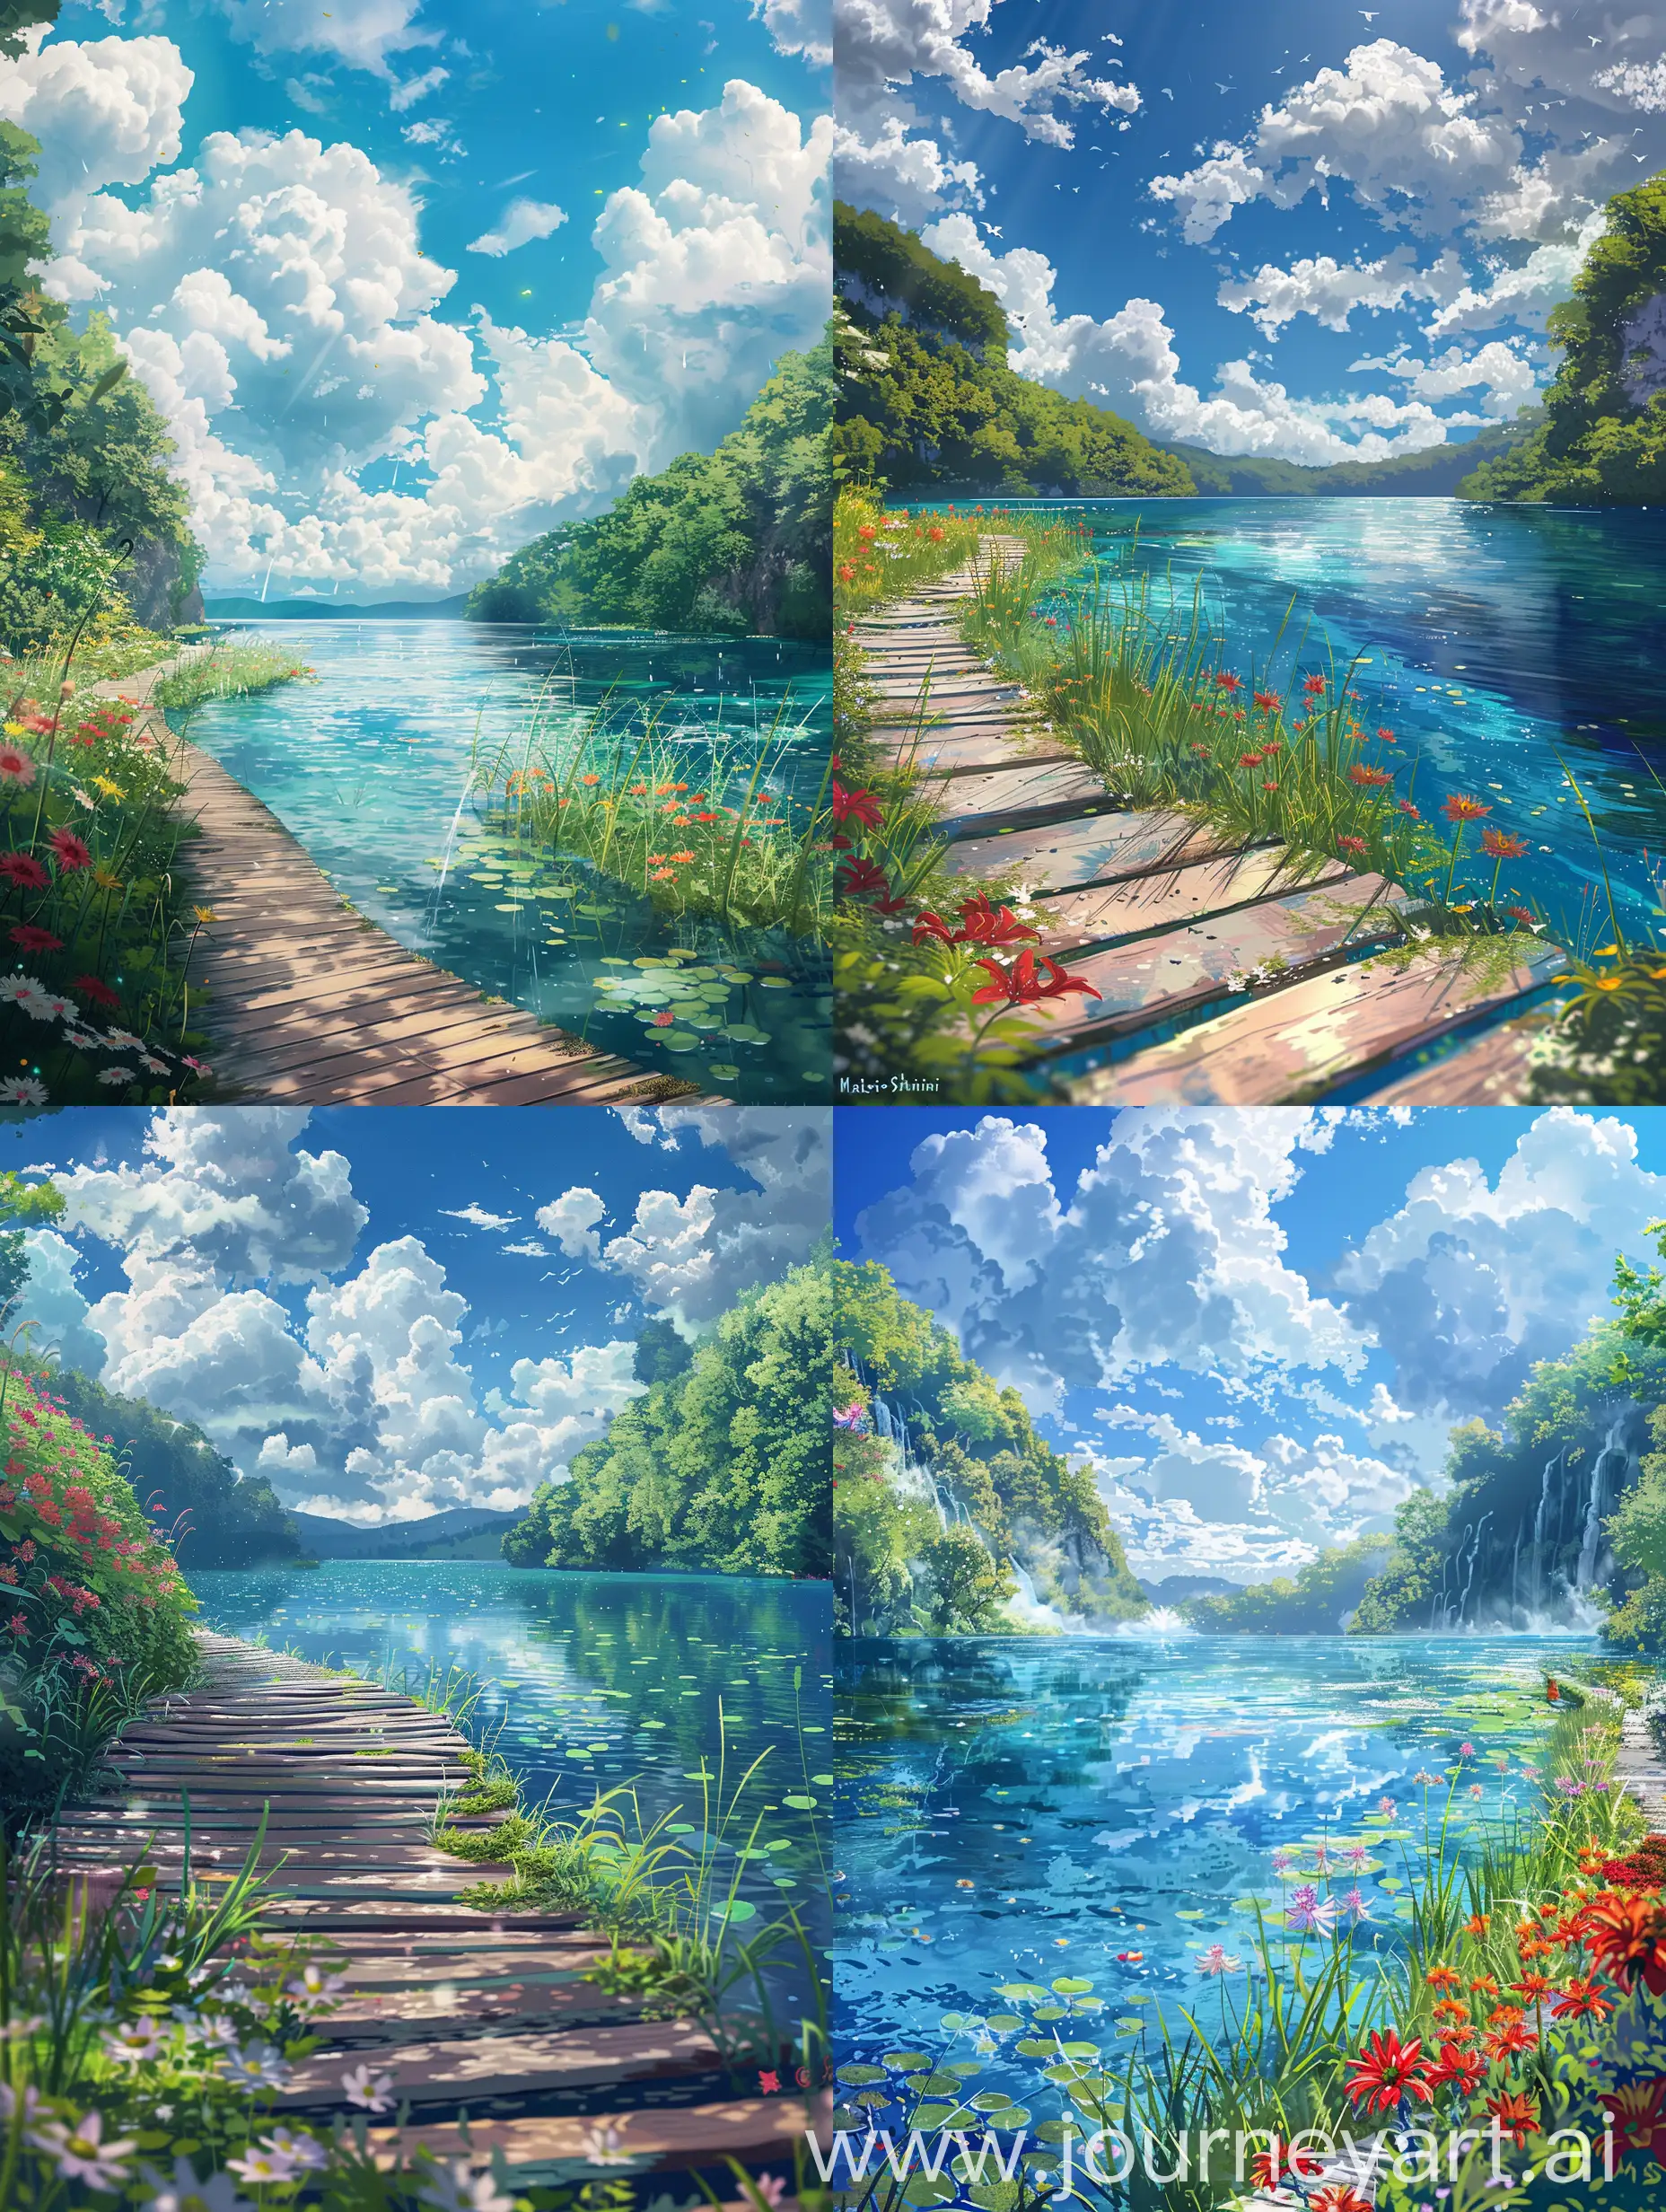 Enchanting-Anime-Scene-Plitvice-Lakes-National-Park-Croatia